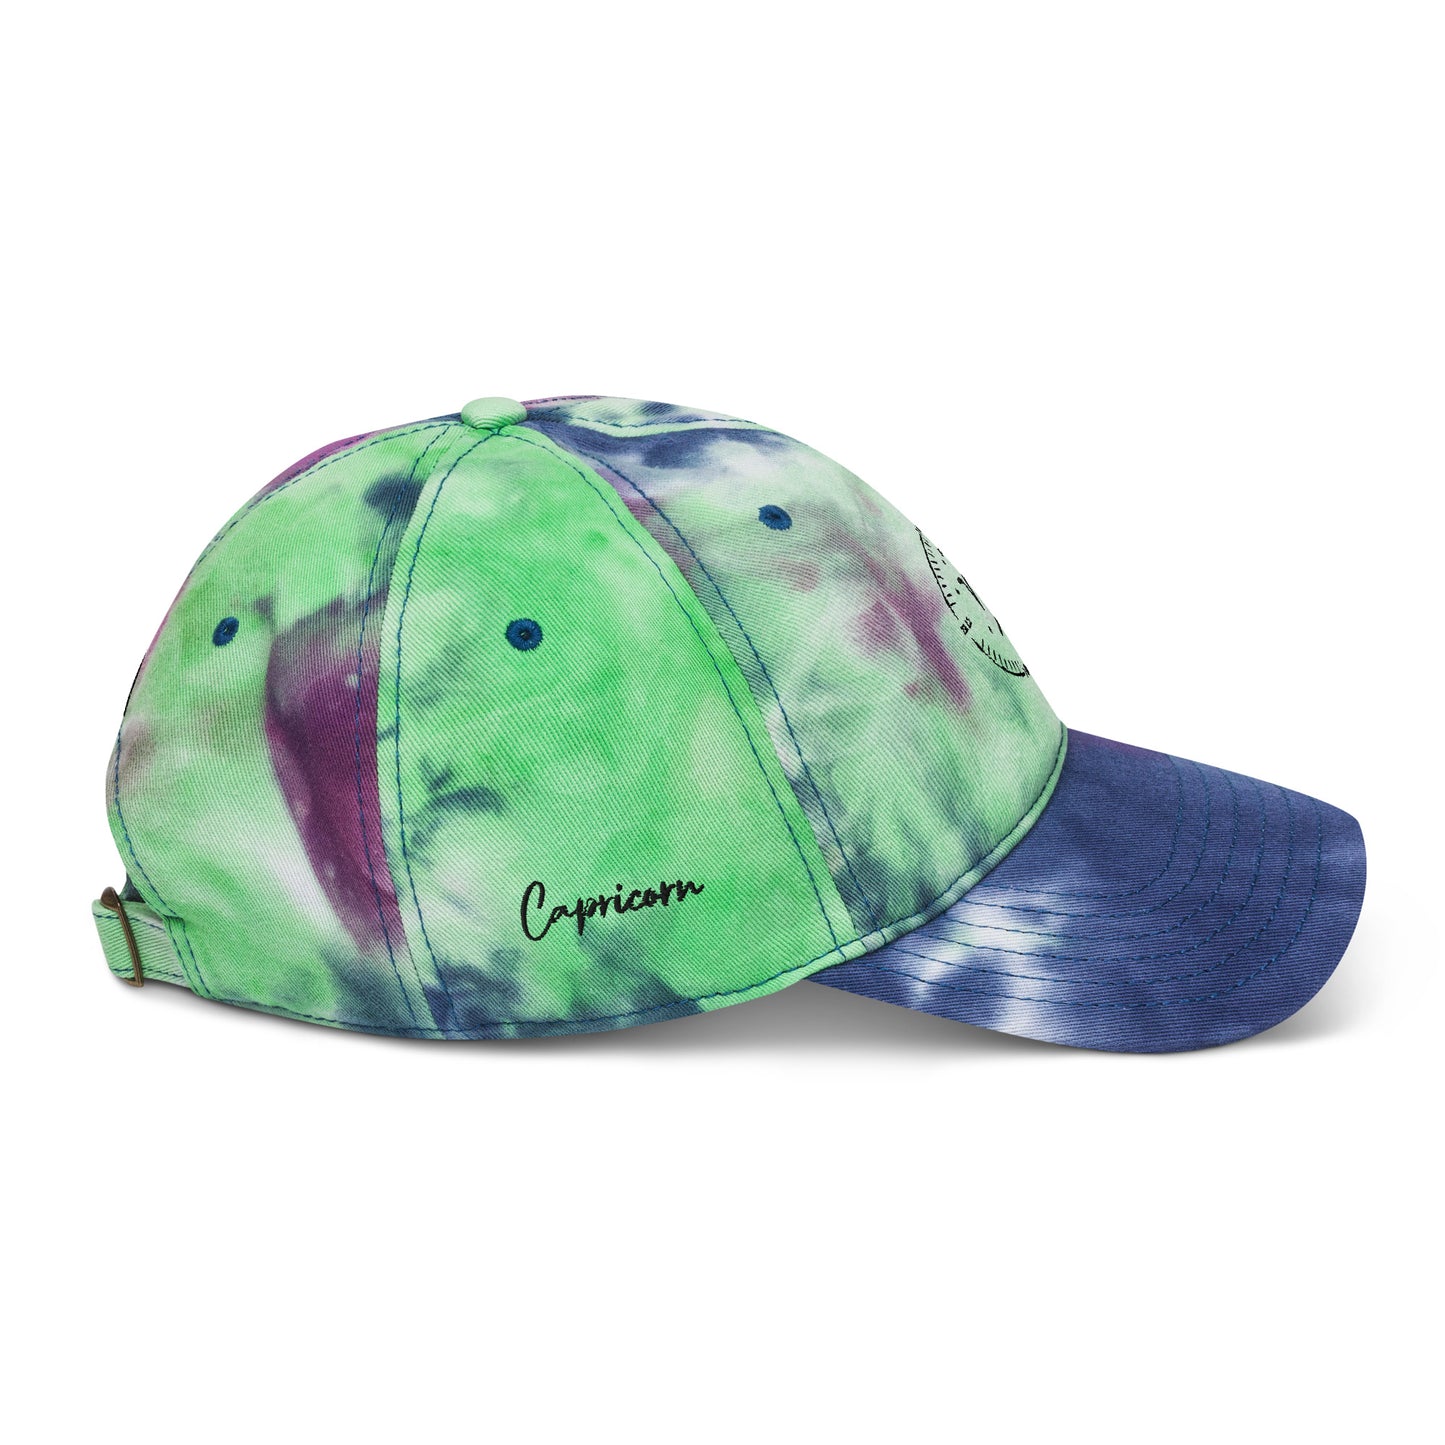 Capricorn Tie dye hat